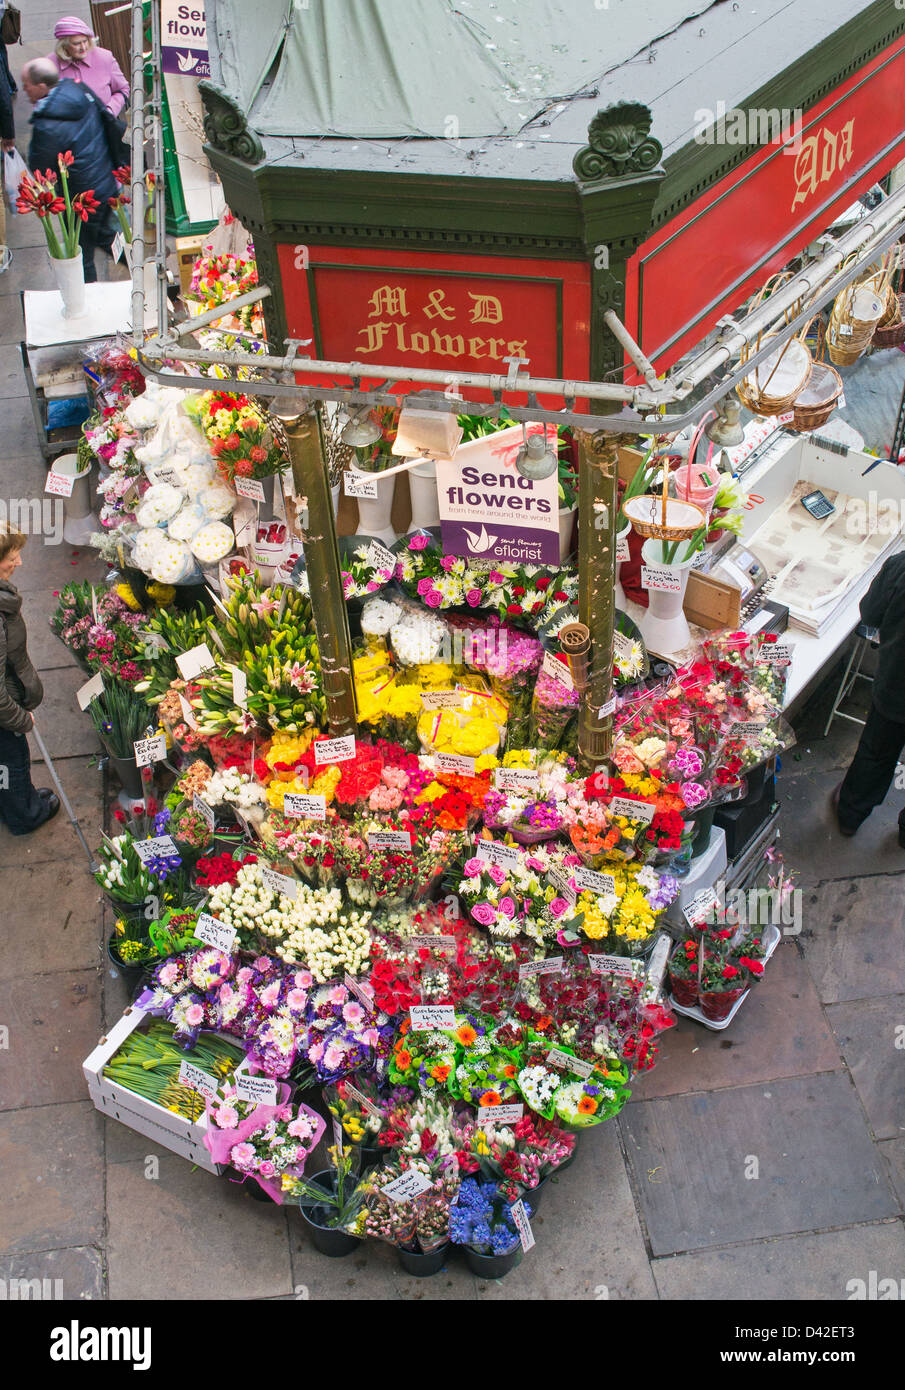 Ada Proctor und M & D Florist Stall in Leeds Kirkgate Market, England UK Stockfoto